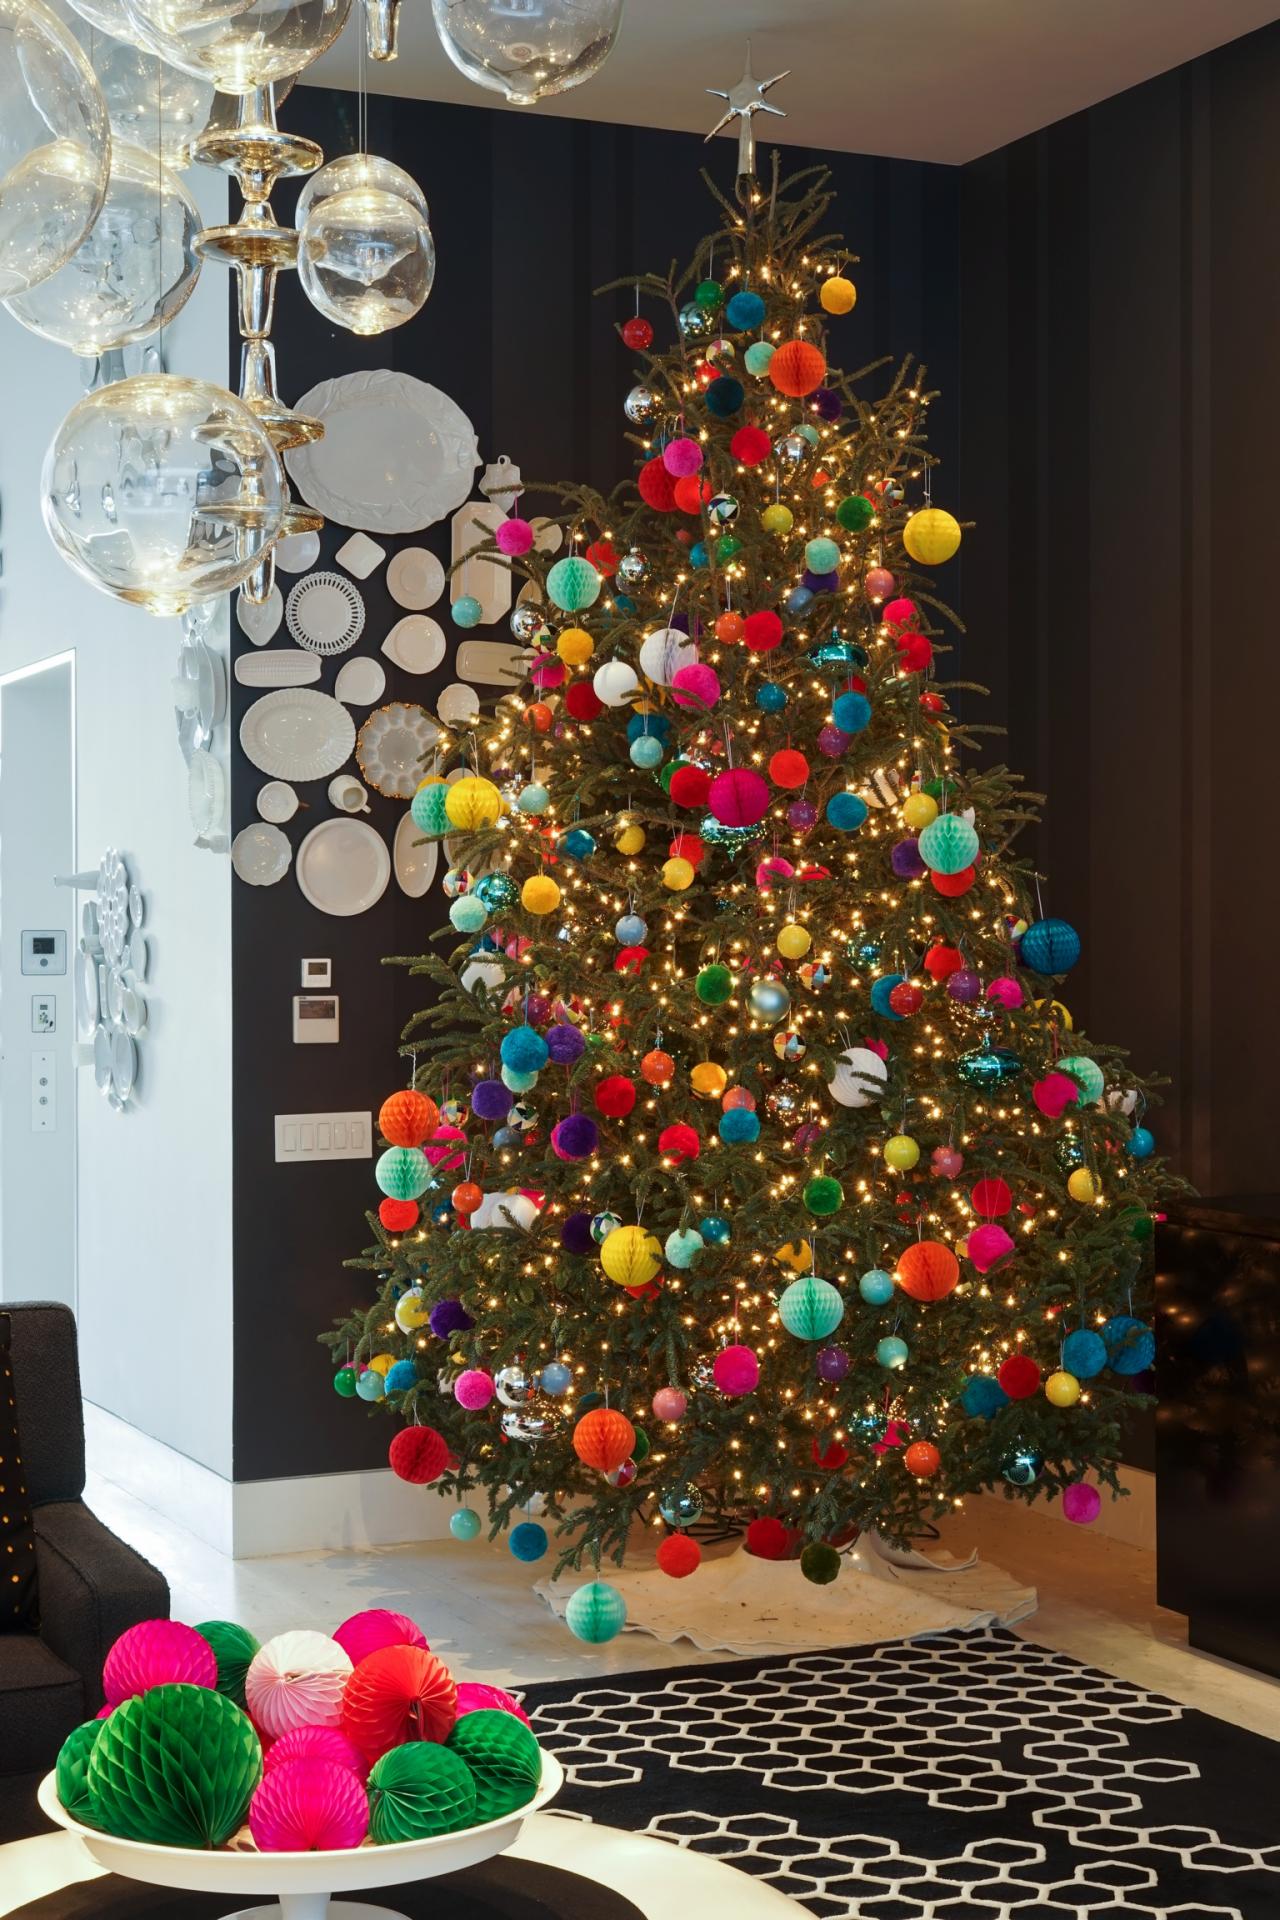 How to Decorate a Christmas Tree | HGTV's Decorating & Design Blog | HGTV